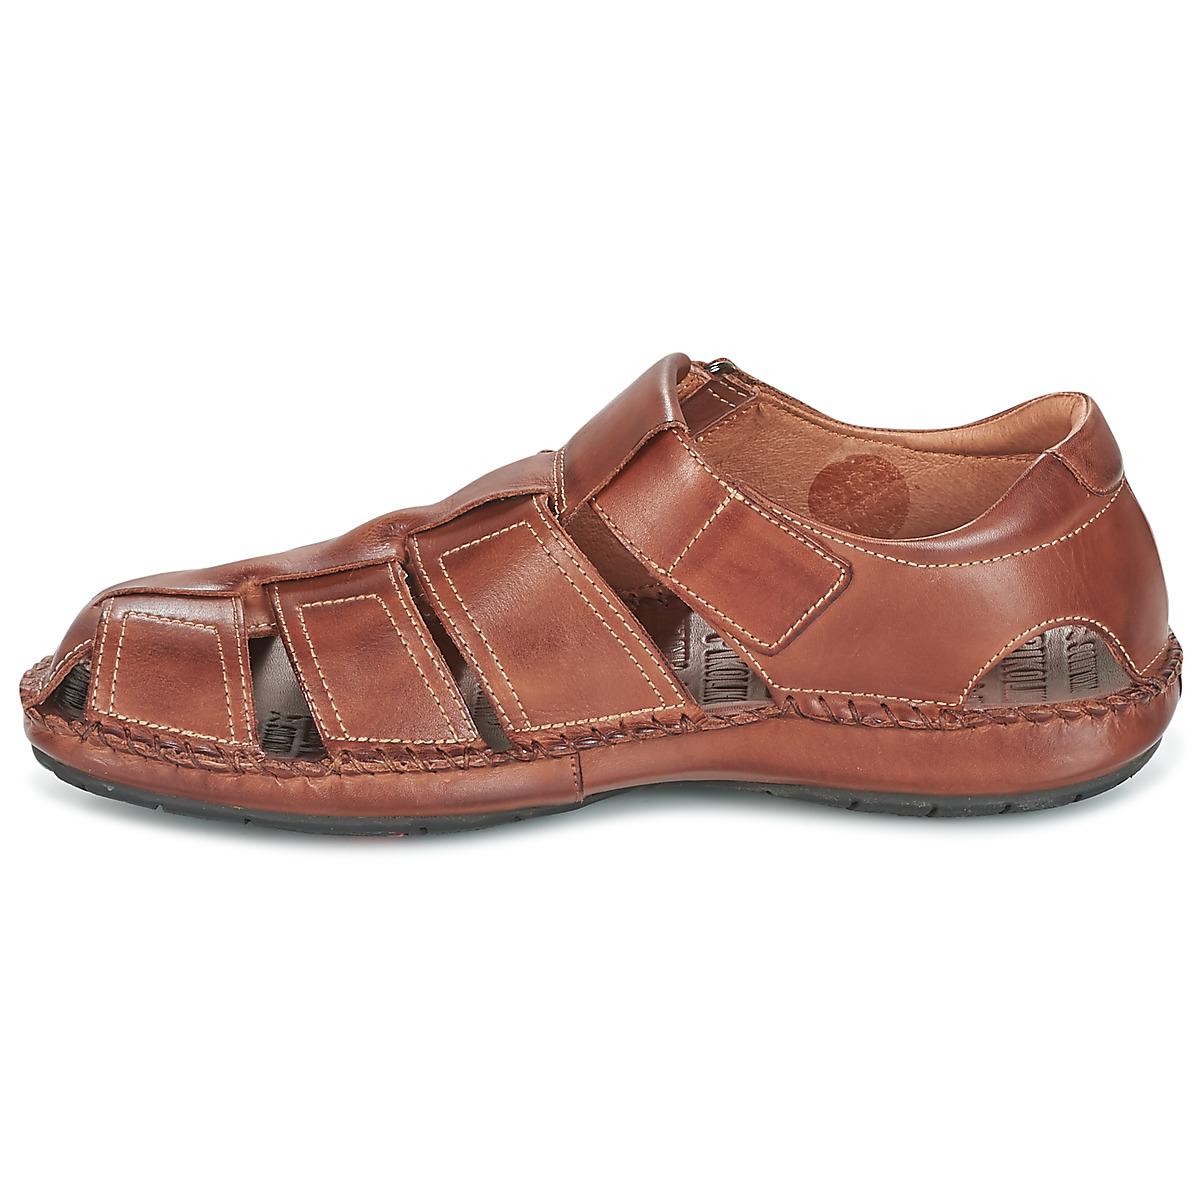 Pikolinos Tarifa 06j Men's Sandals In Brown for Men - Lyst